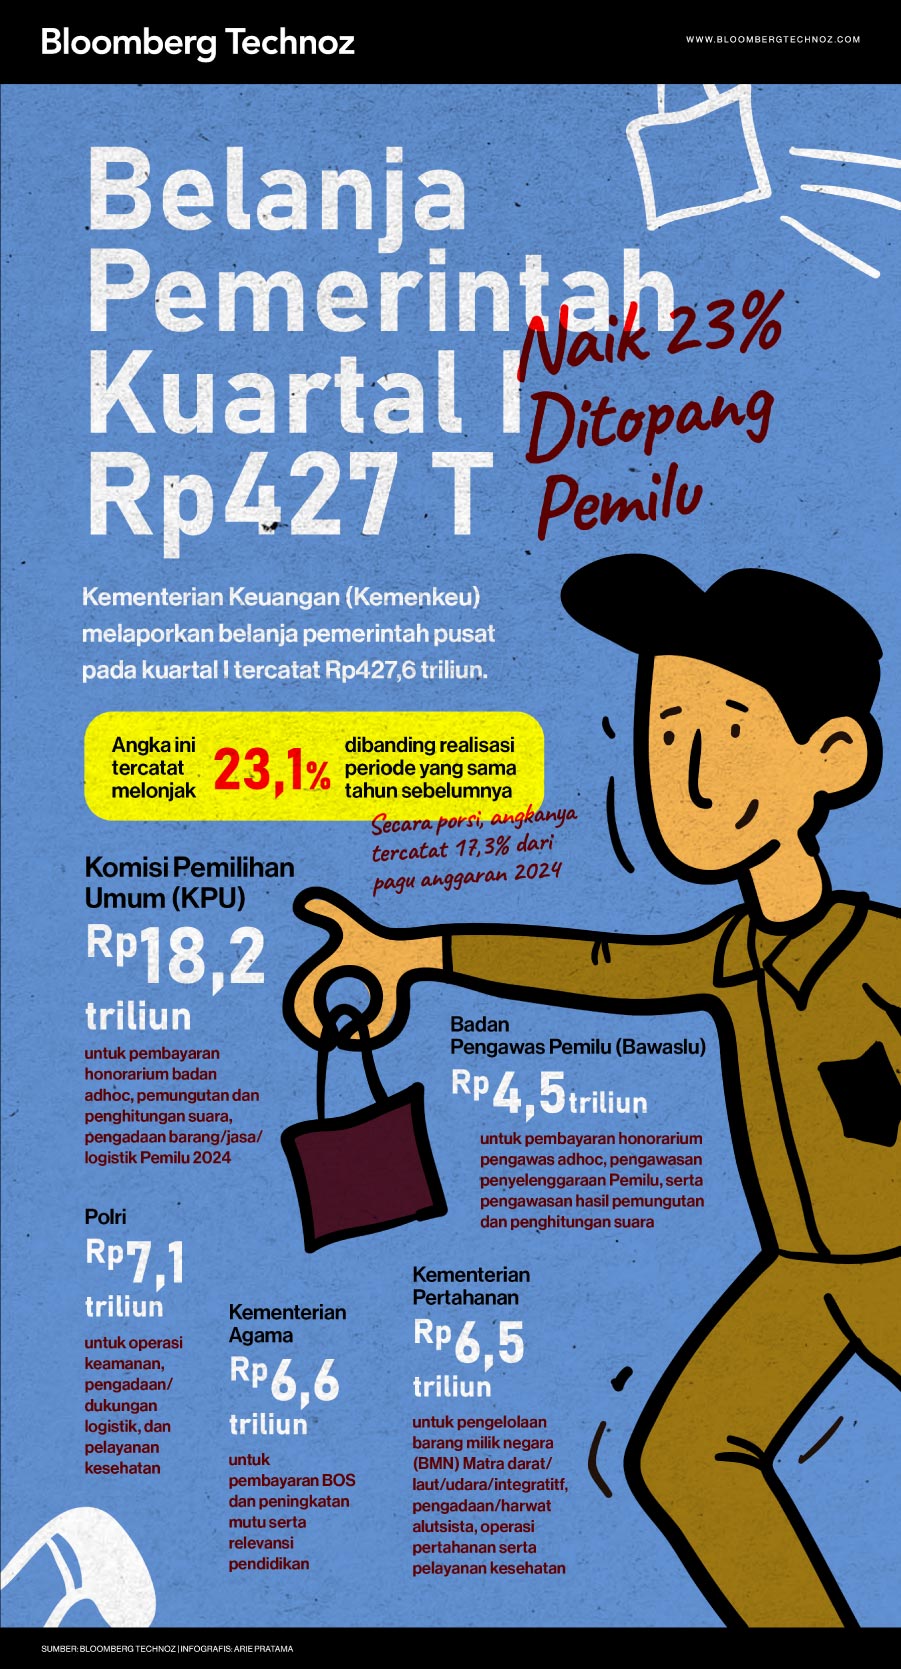 Belanja Pemerintah Kuartal I Rp427 T, Naik 23% Ditopang Pemilu (Bloomberg Technoz/Arie Pratama)